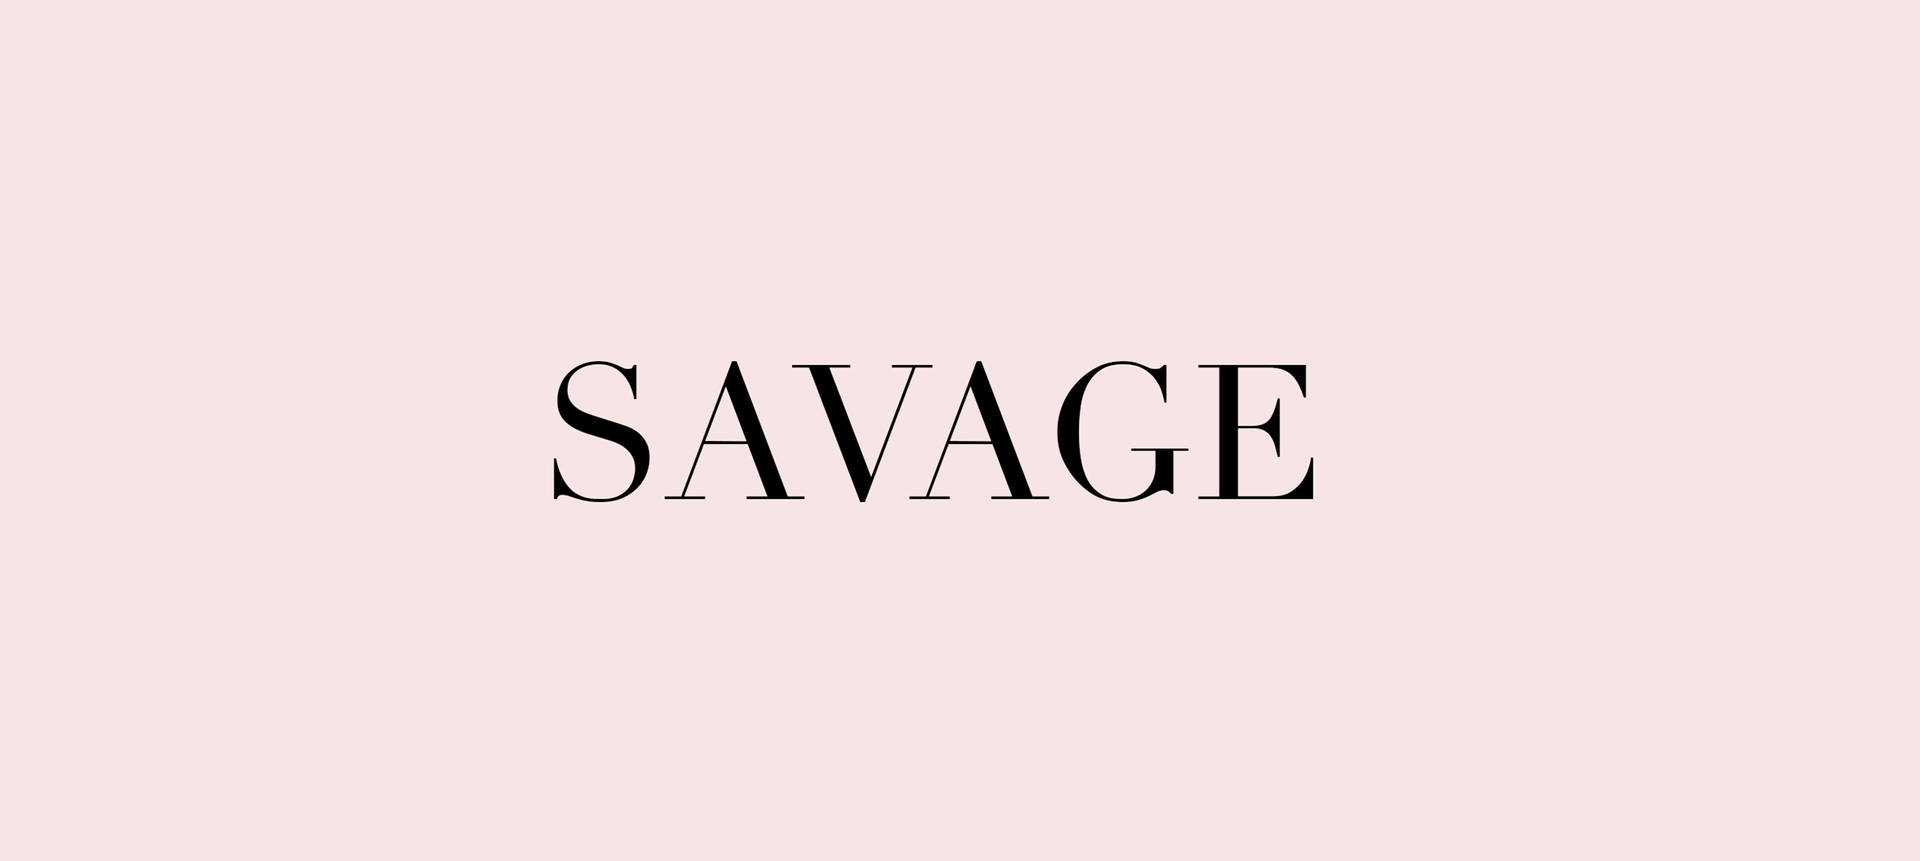 Savage Serif Text On Pink Background